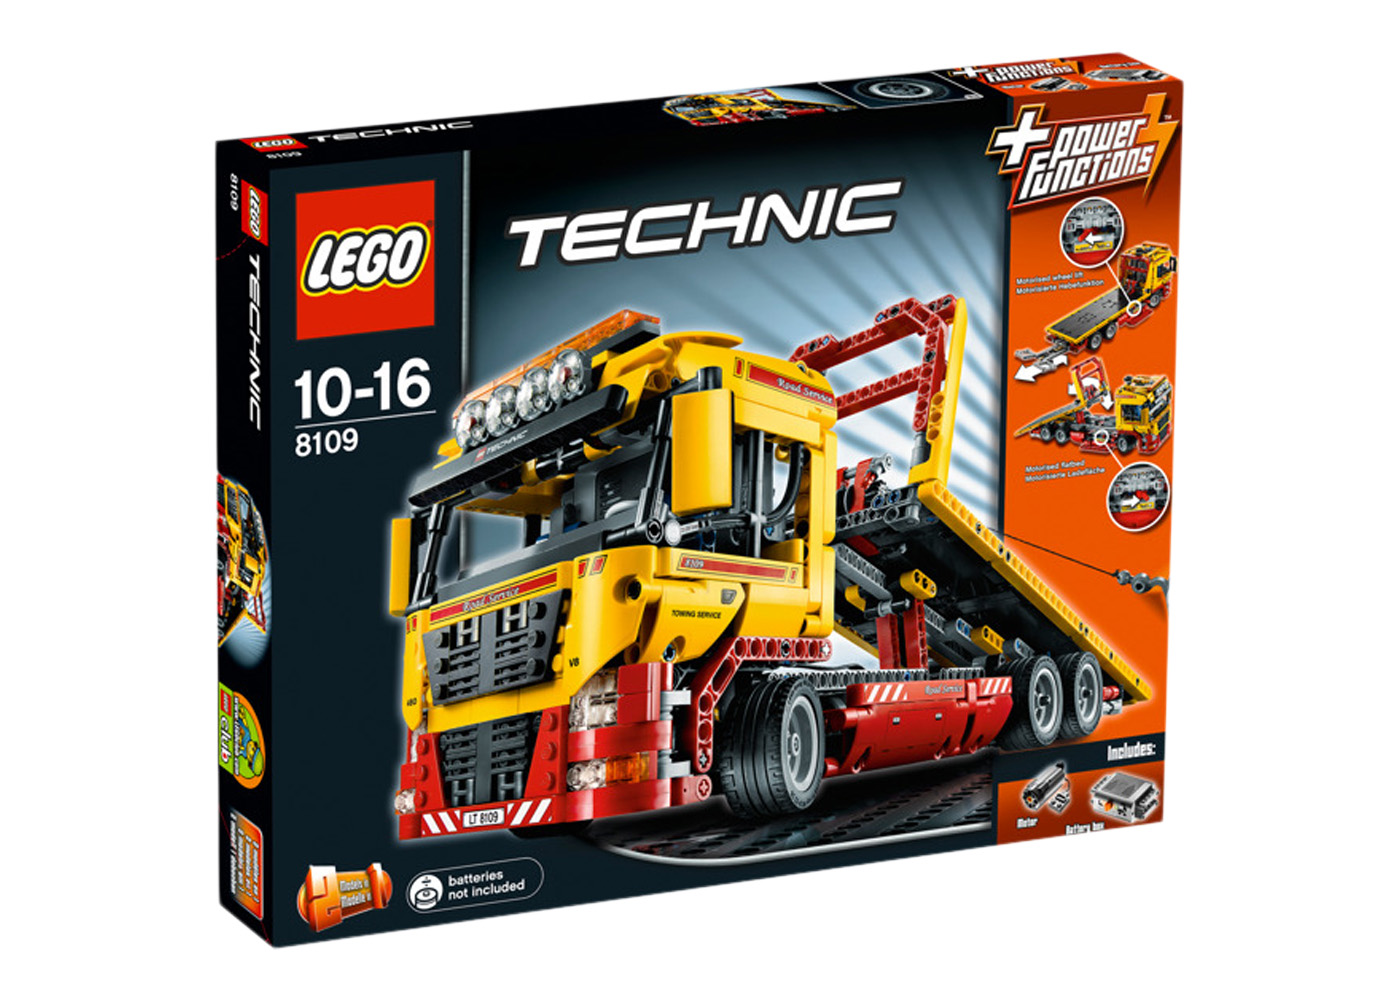 LEGO Technic Flatbed Truck Set 8109 - US